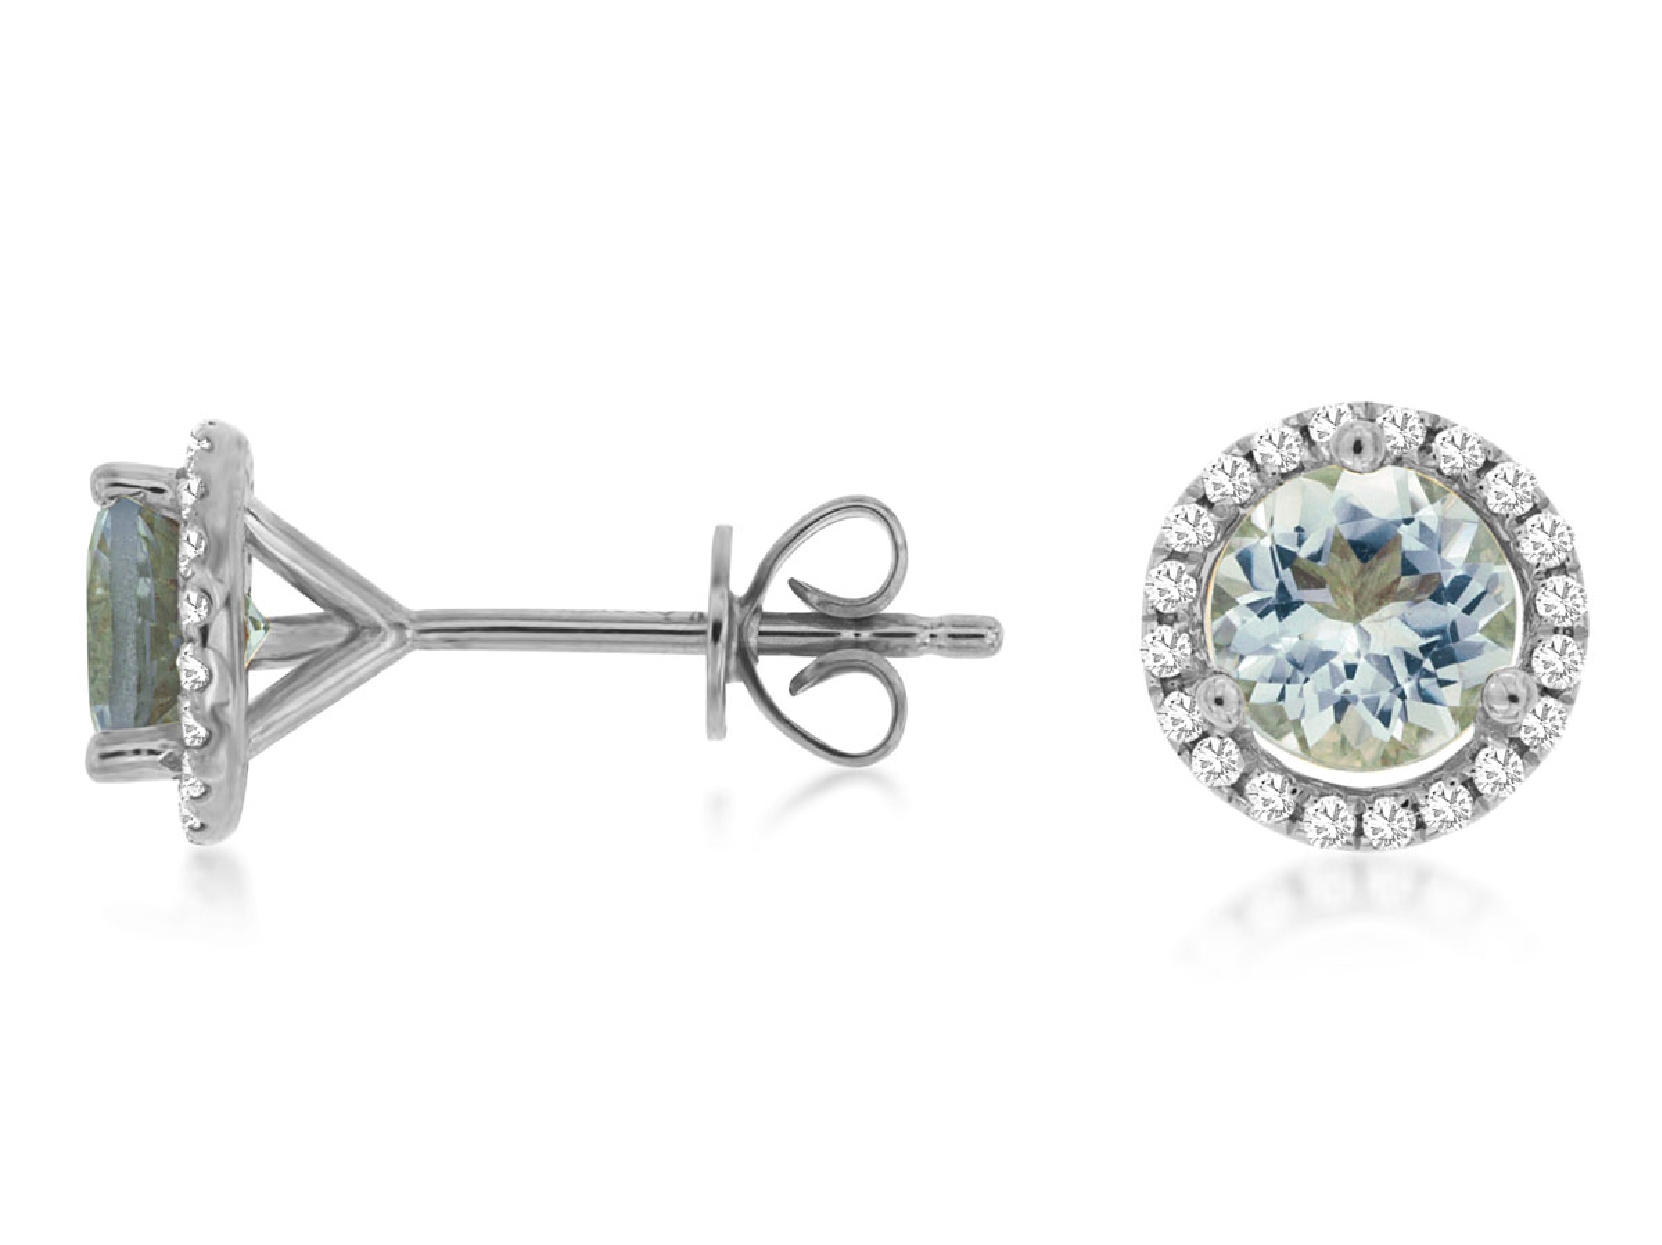 14K White Gold Round Aquamarine Stud Earrings with Diamond Halo and Friction Backs

1.10cttw Aquamarines
0.16cttw Diamonds